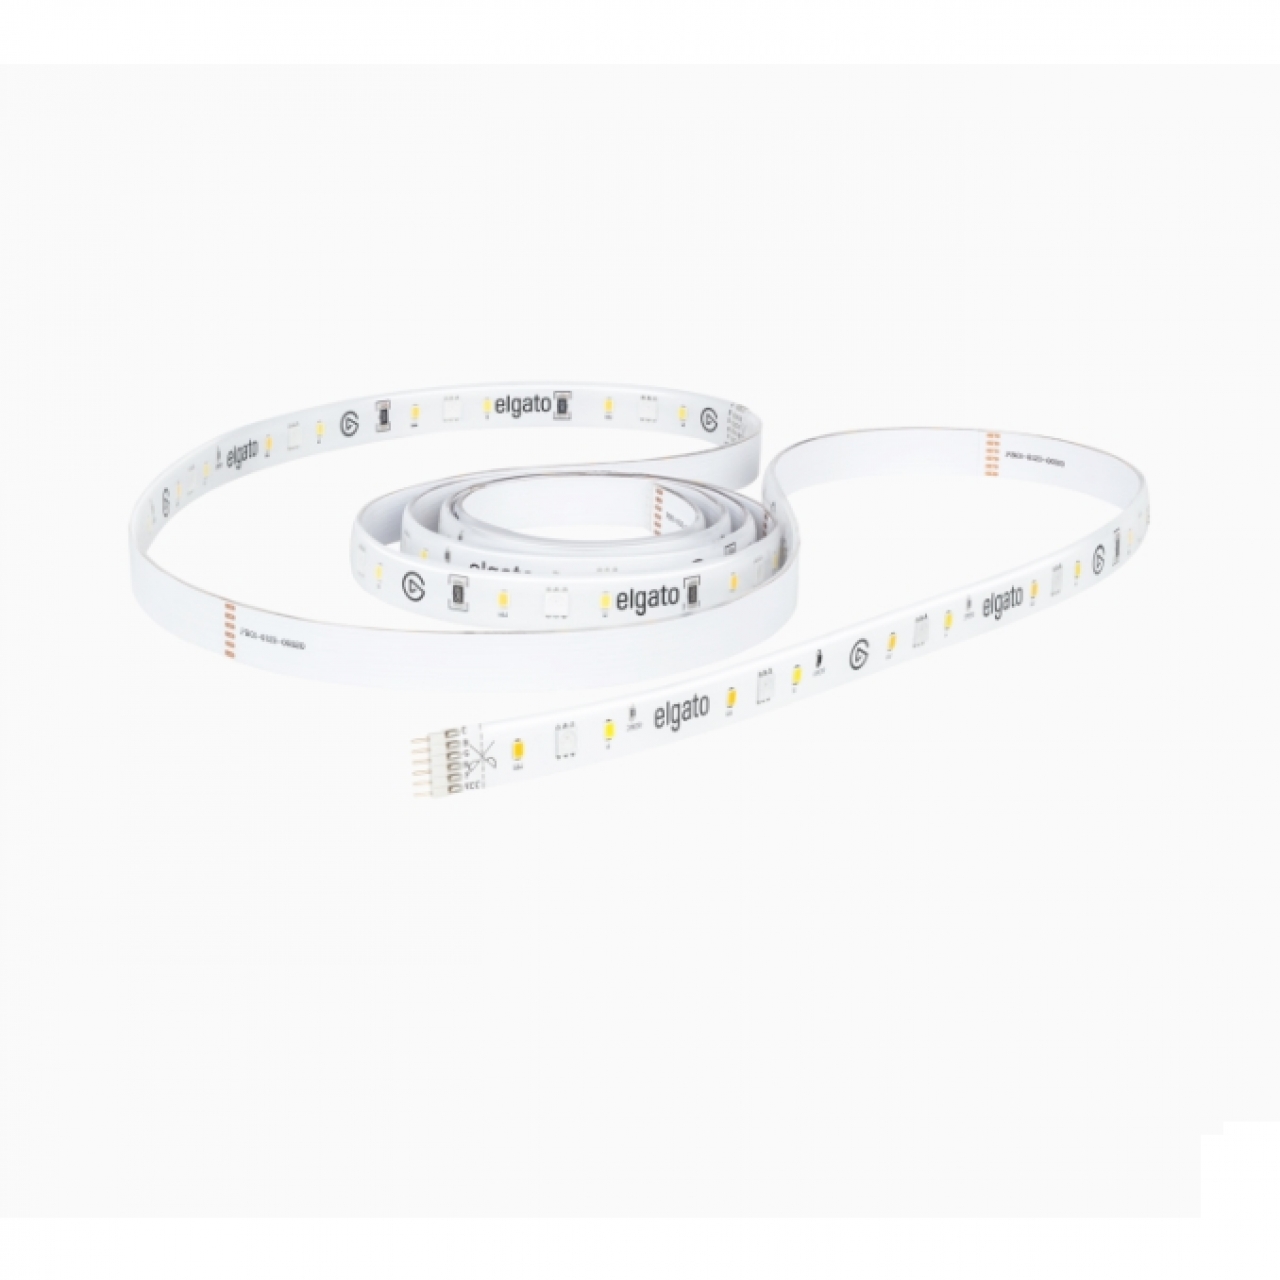 CORSAIR 10LAE9901 - Elgato Light Strip Extension